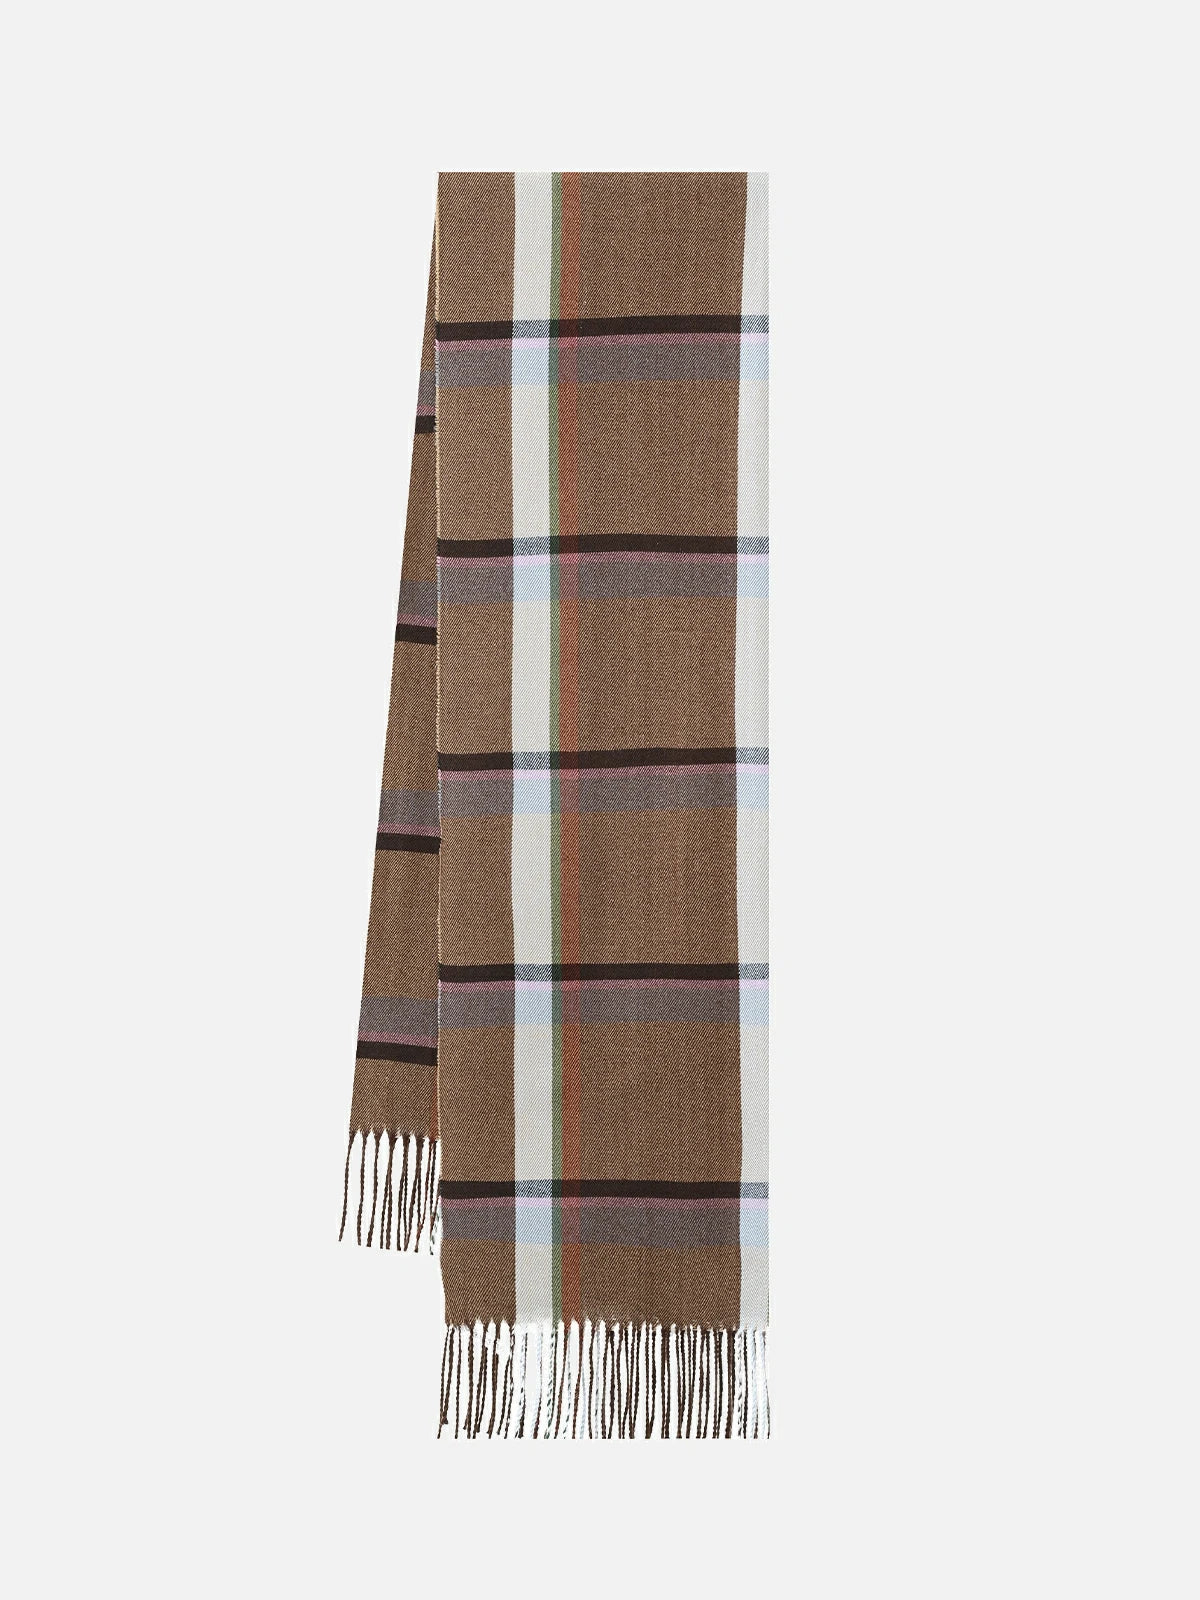 Premium knitting of the stylish plaid fringe scarf adding a highlight to winter